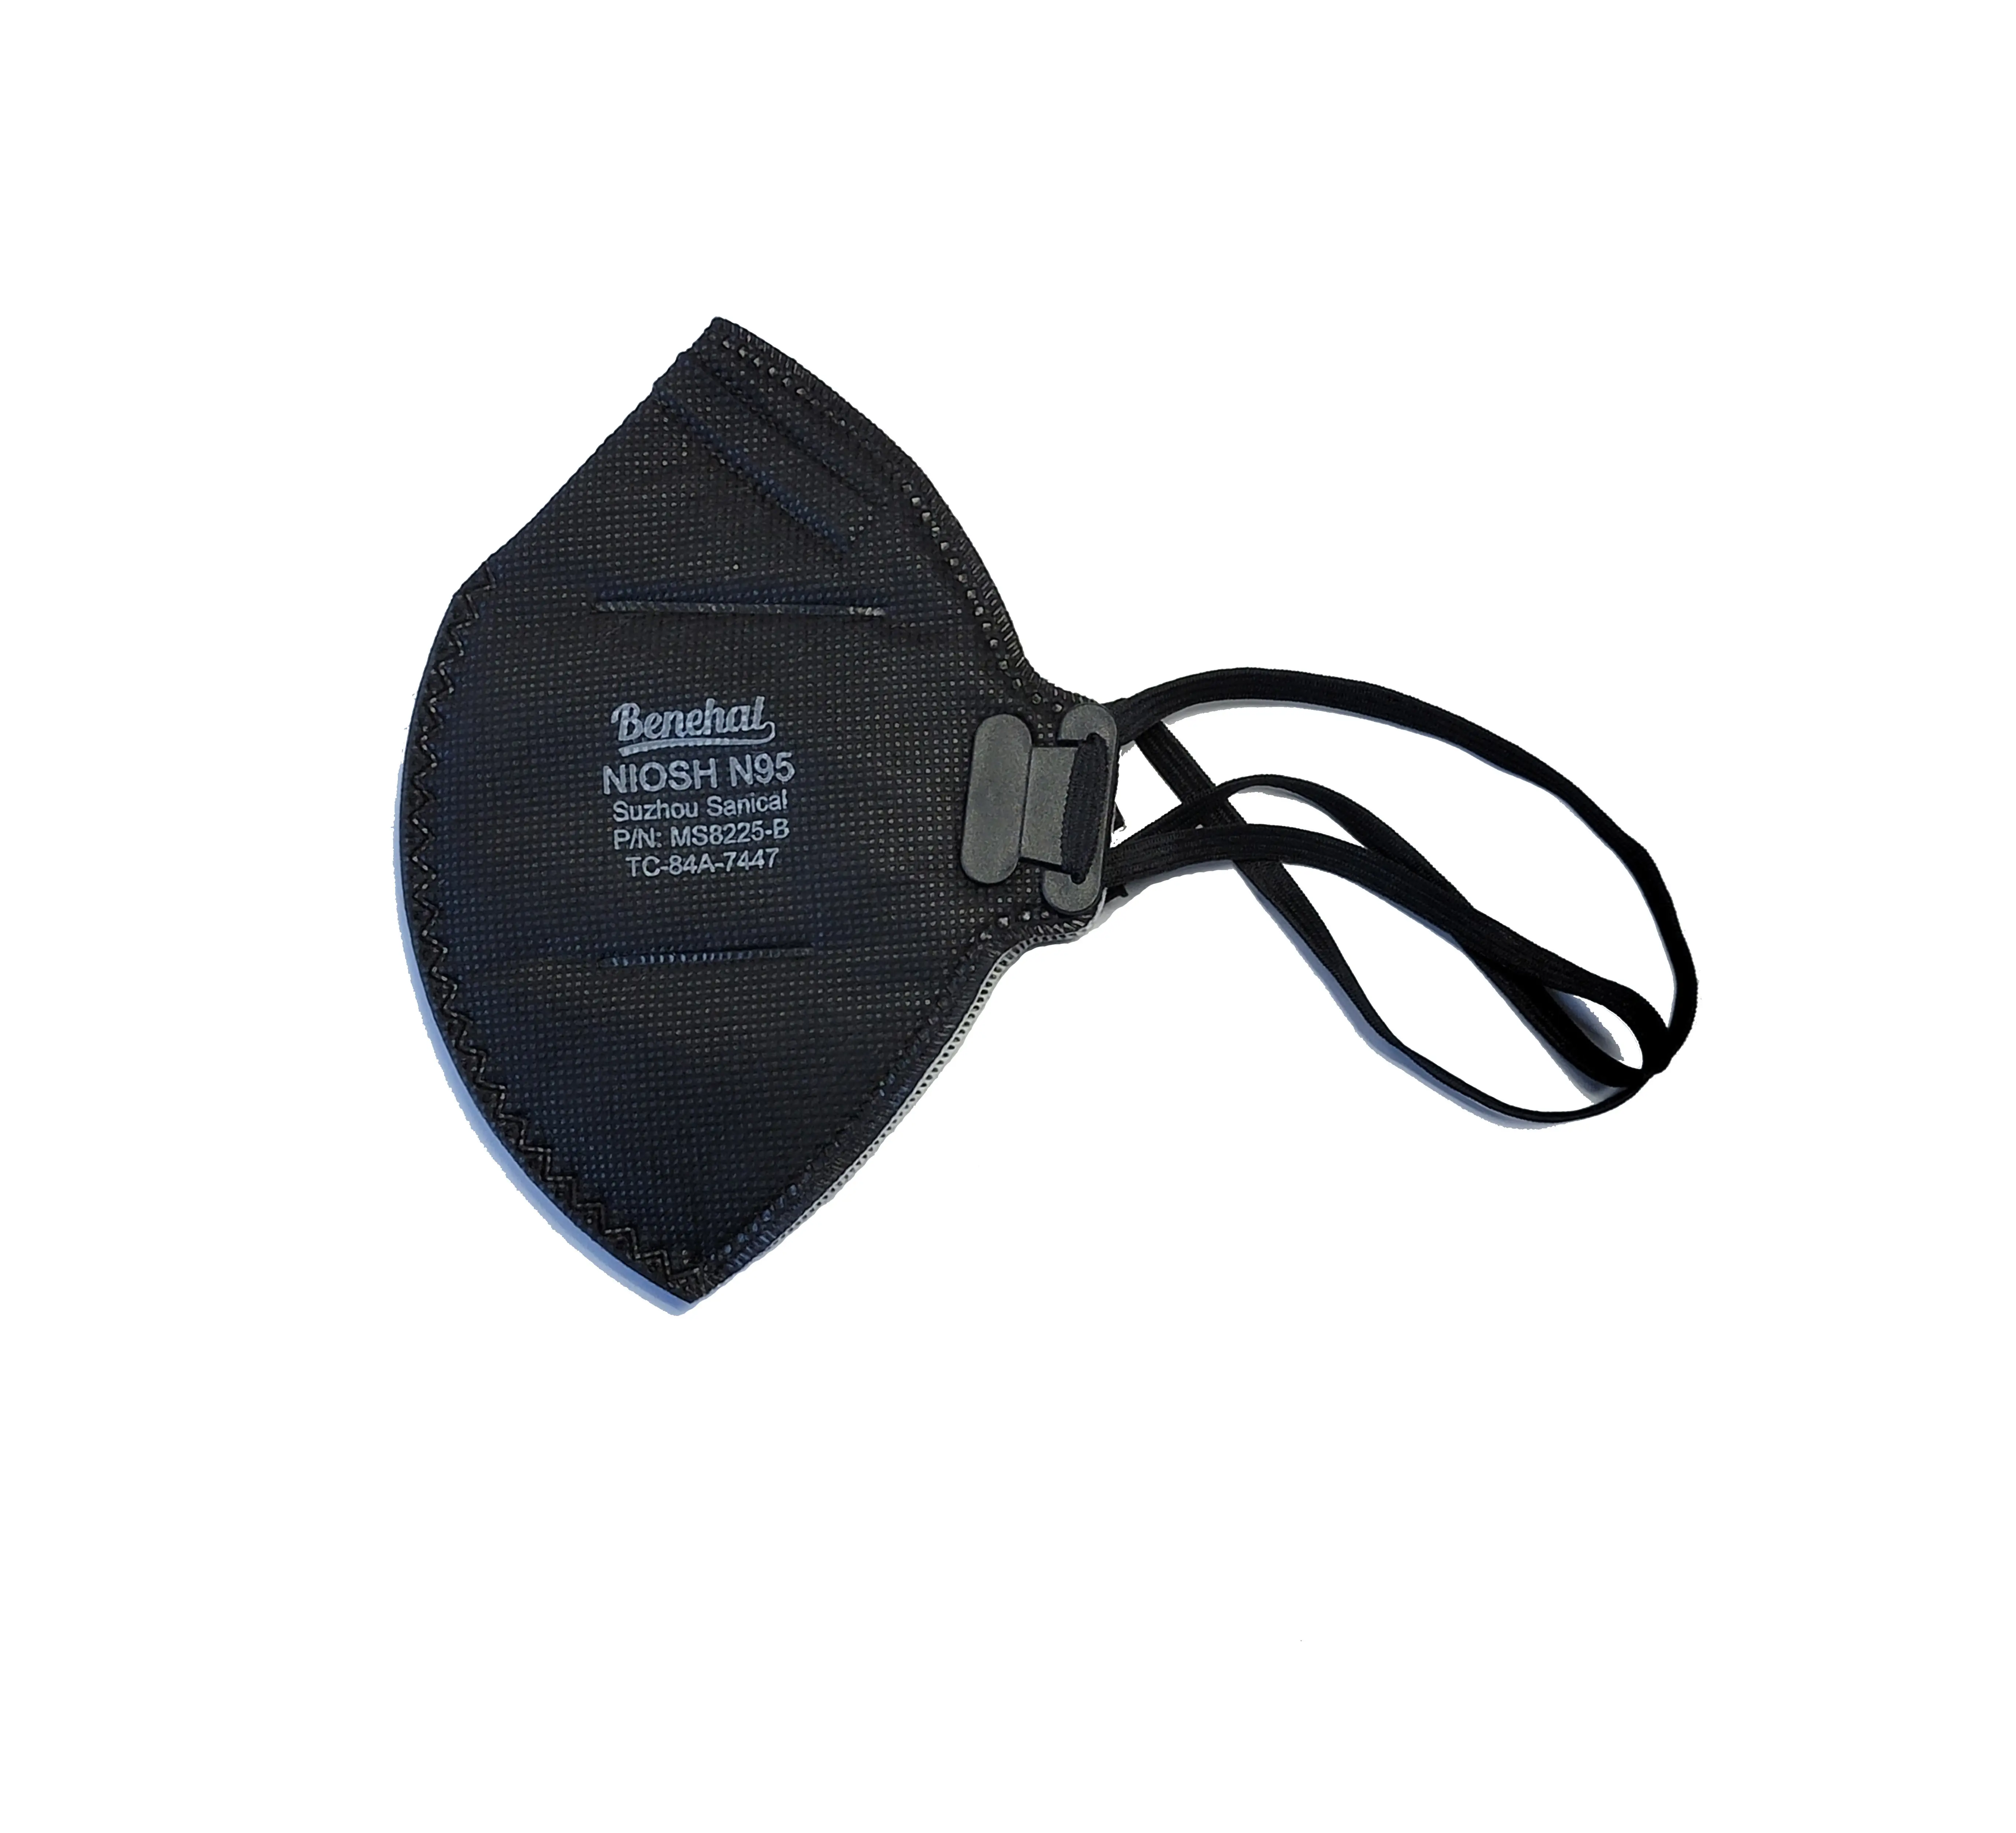 black Niosh N95mask Black foldable N95 respirator N95 N95 black masks fashion N95 masks respirators Black masks Benehal 8225s